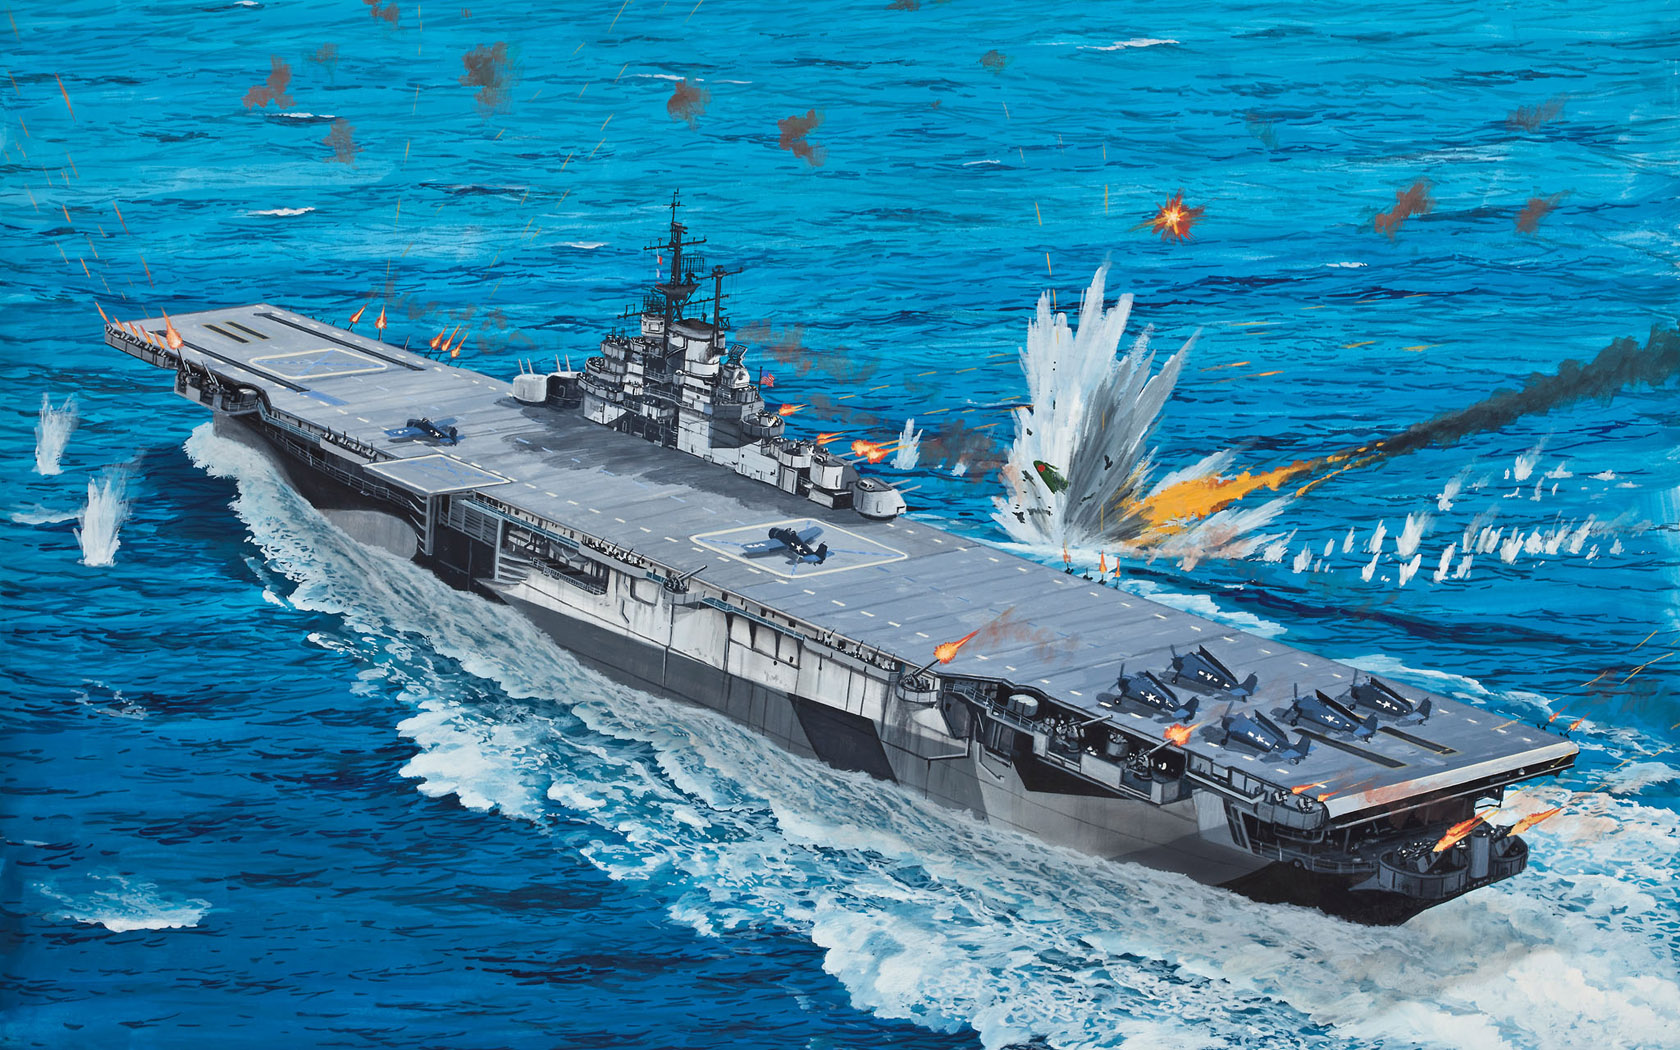 General 1680x1050 war warship sea military military vehicle artwork water waves United States Navy navy aircraft carrier World War II Vought F4U Corsair battle